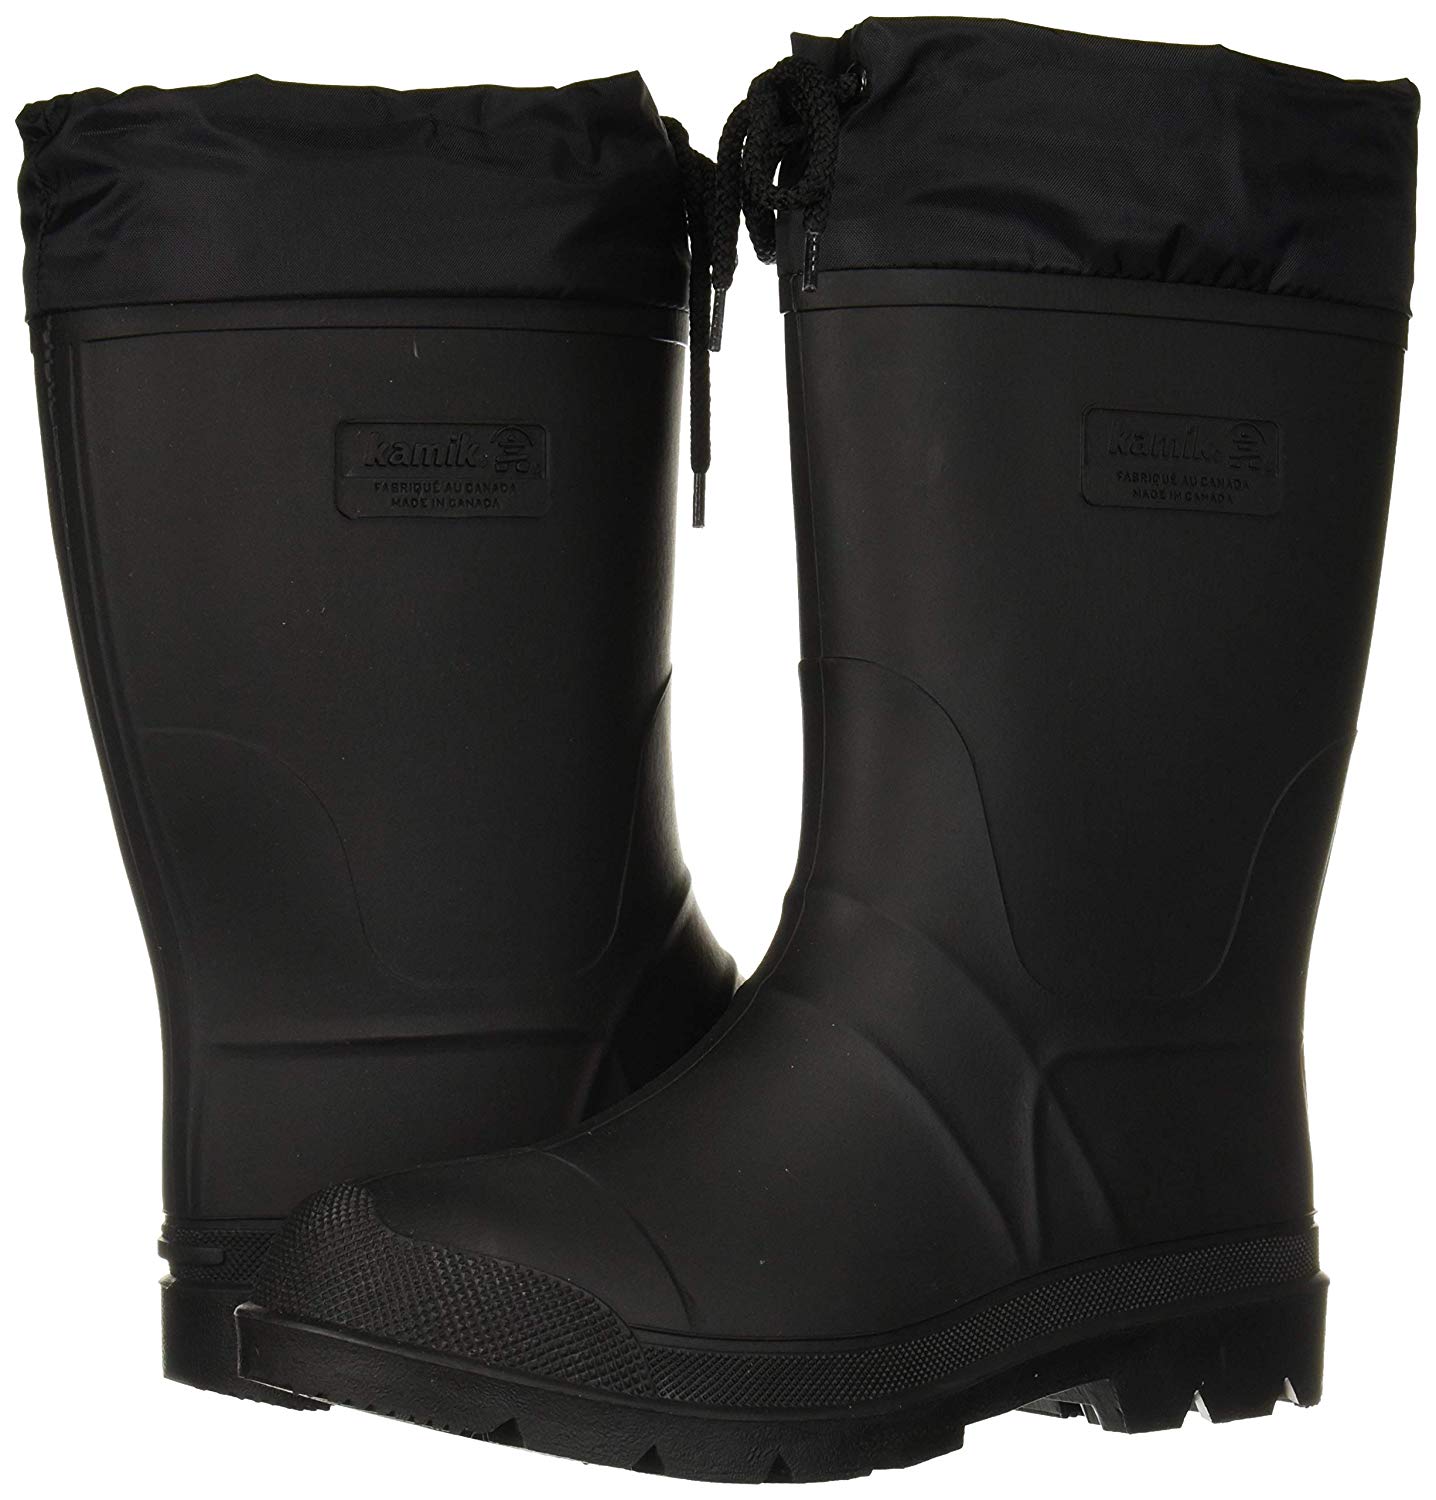 Kamik Men's Hunter Snow Boot, Black, Size 9.0 6ku4 627574331202 | eBay